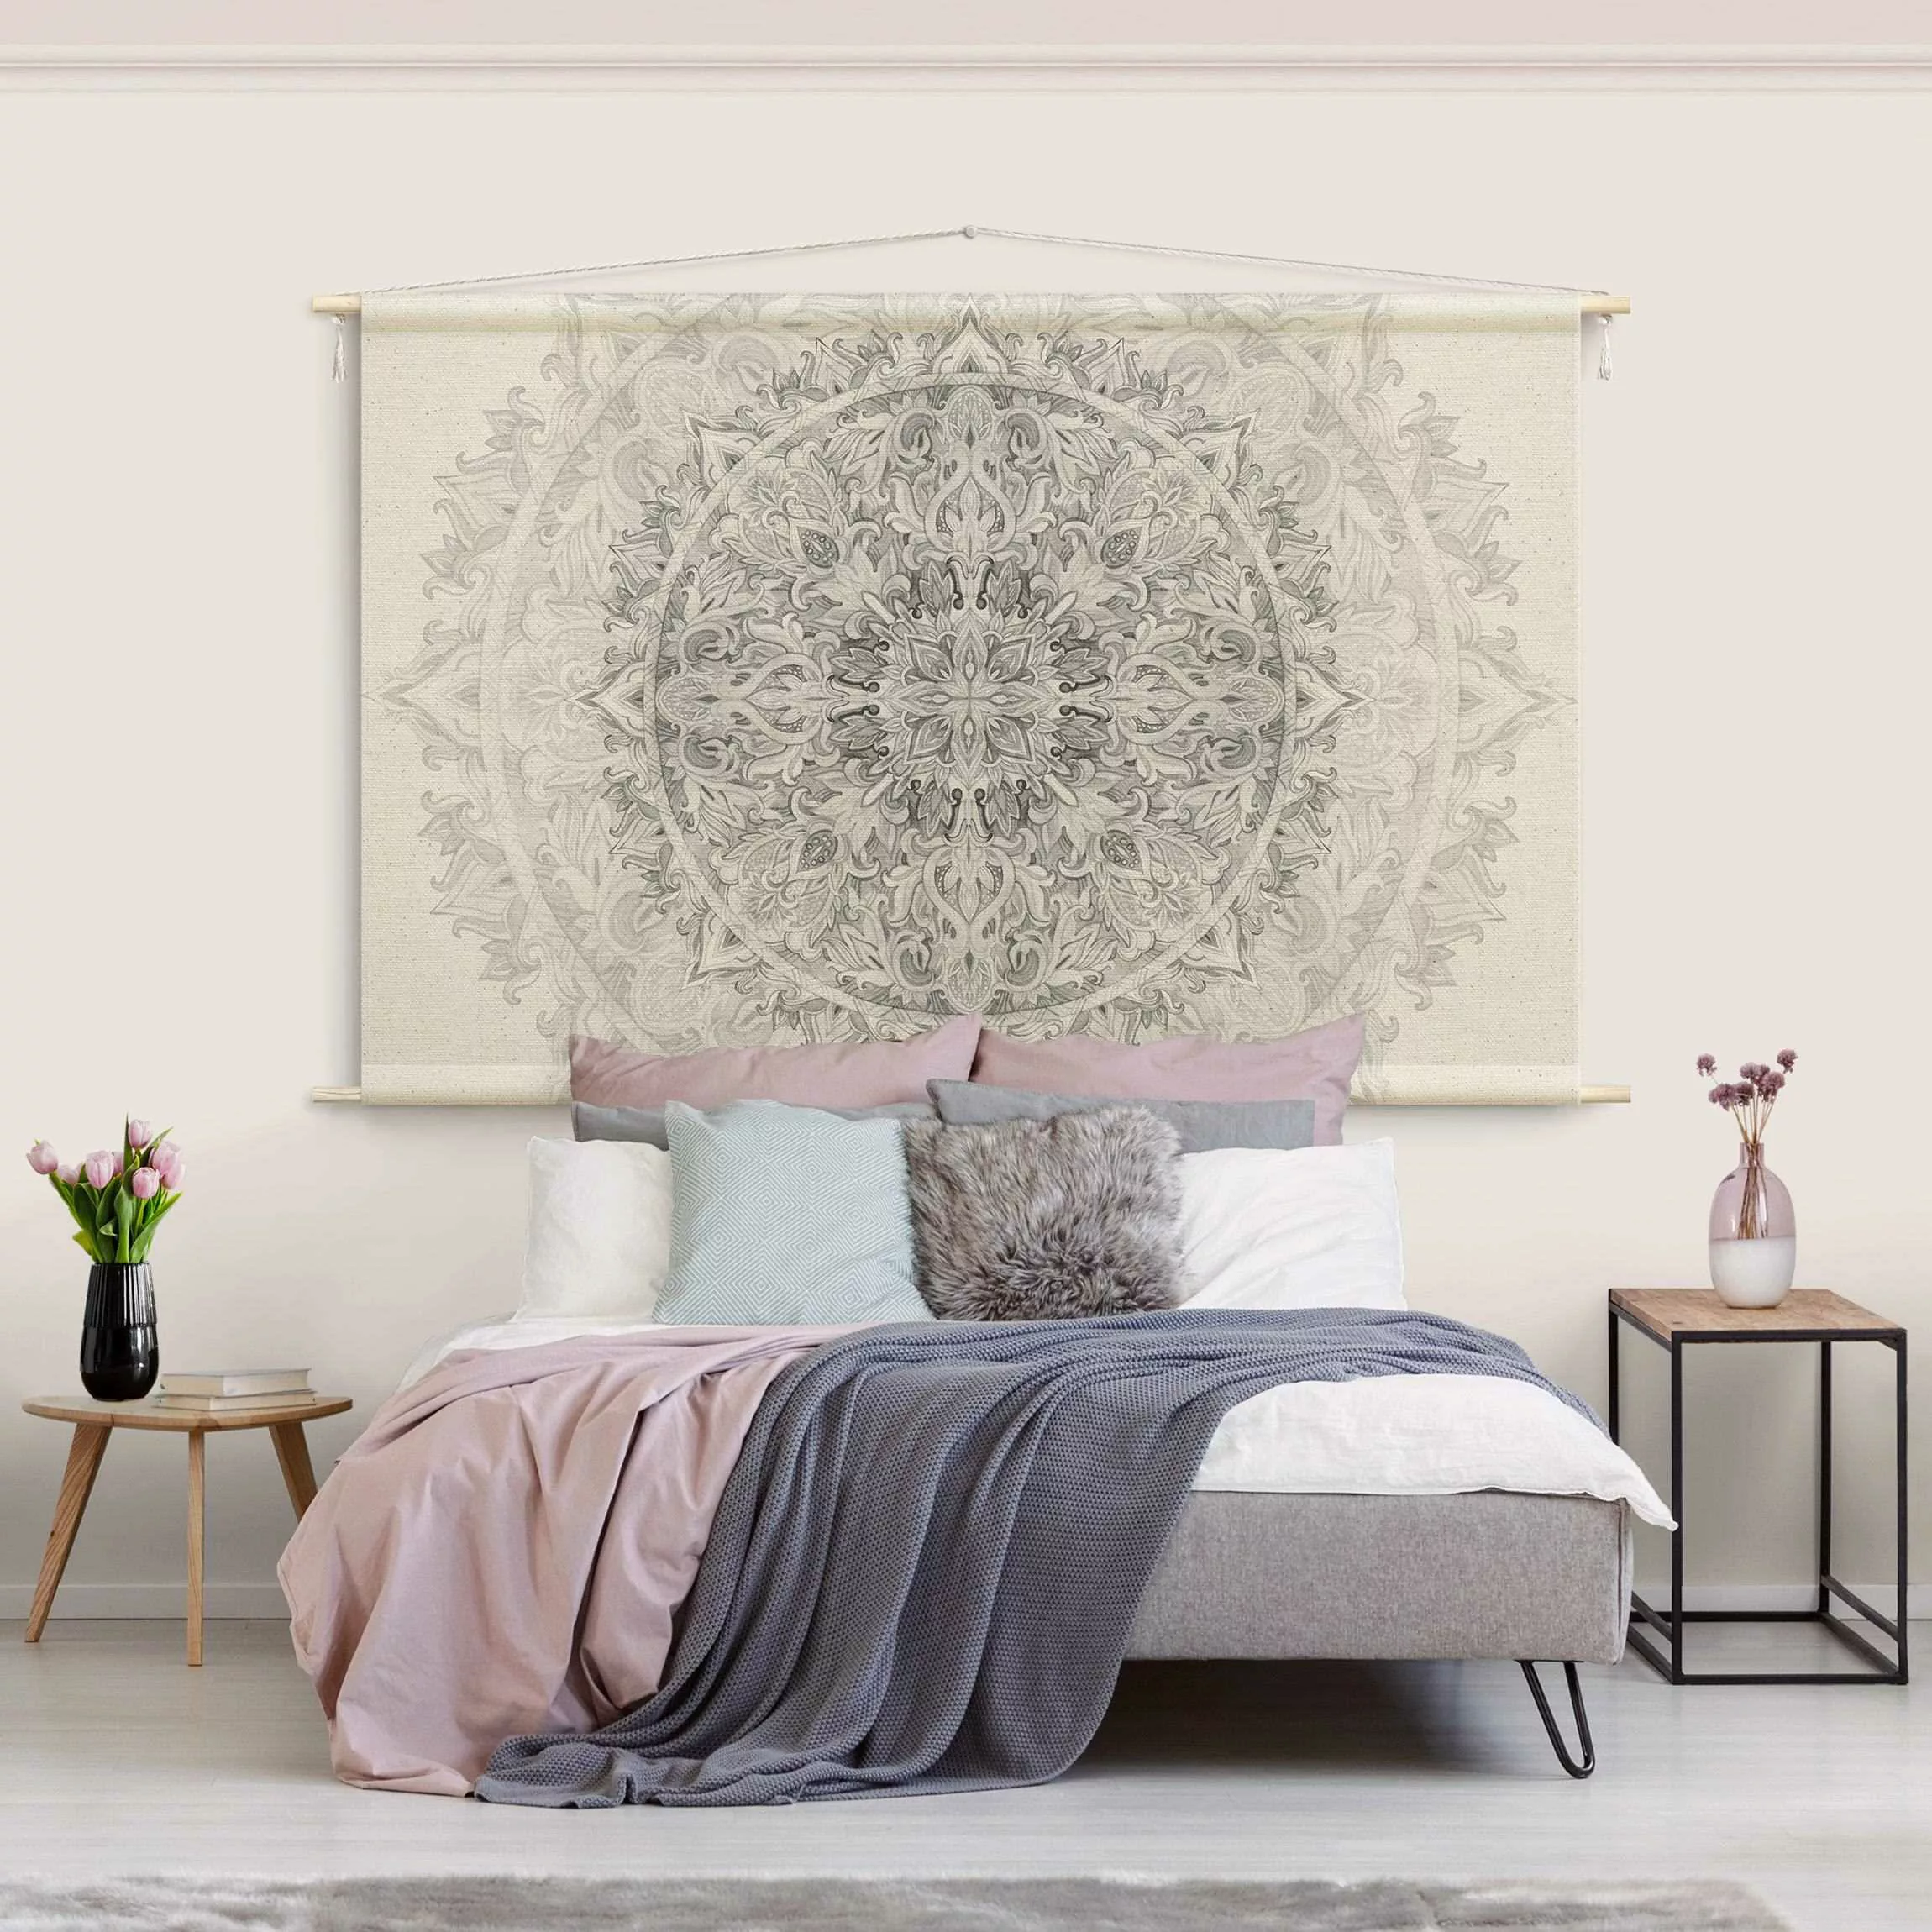 Wandteppich Mandala Aquarell Ornament Muster Schwarz-Weiß günstig online kaufen